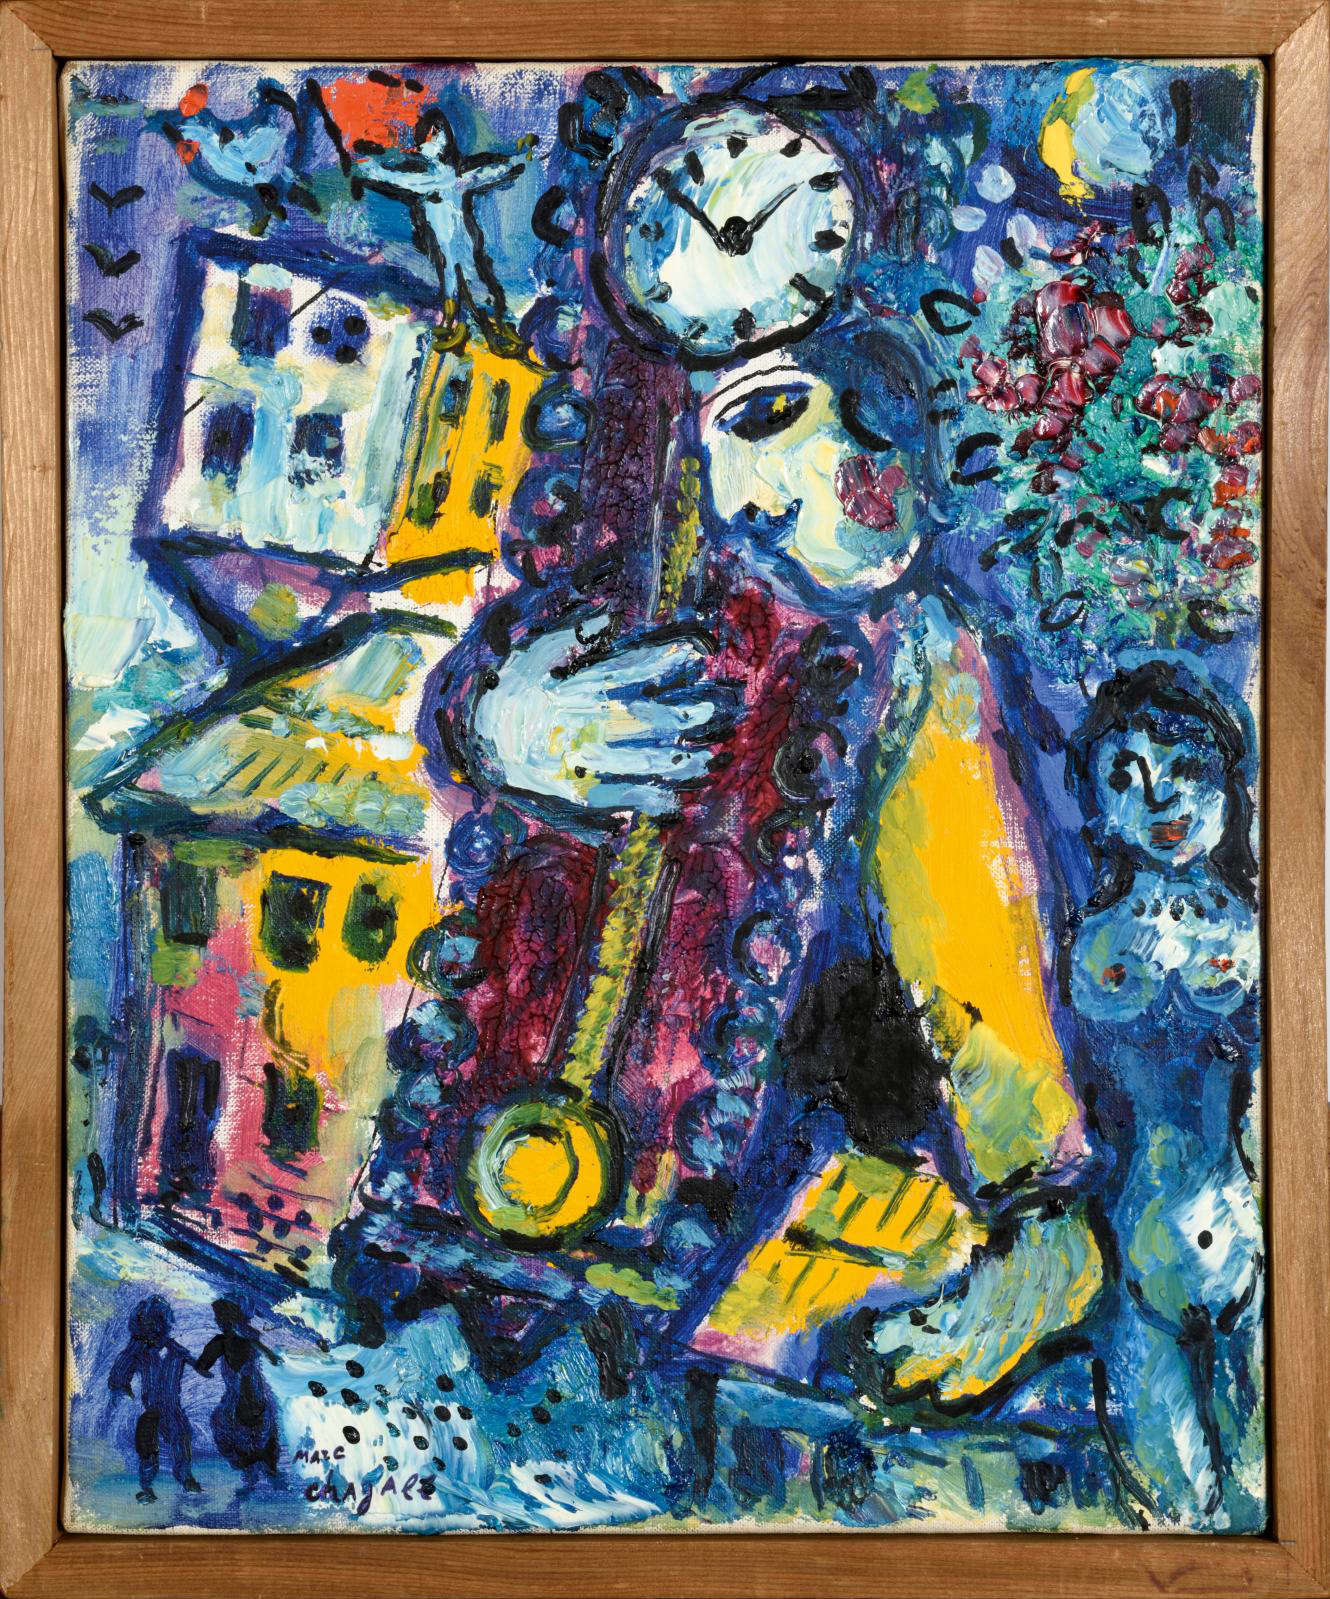 The Clock Man: Chagall's Dreamtime